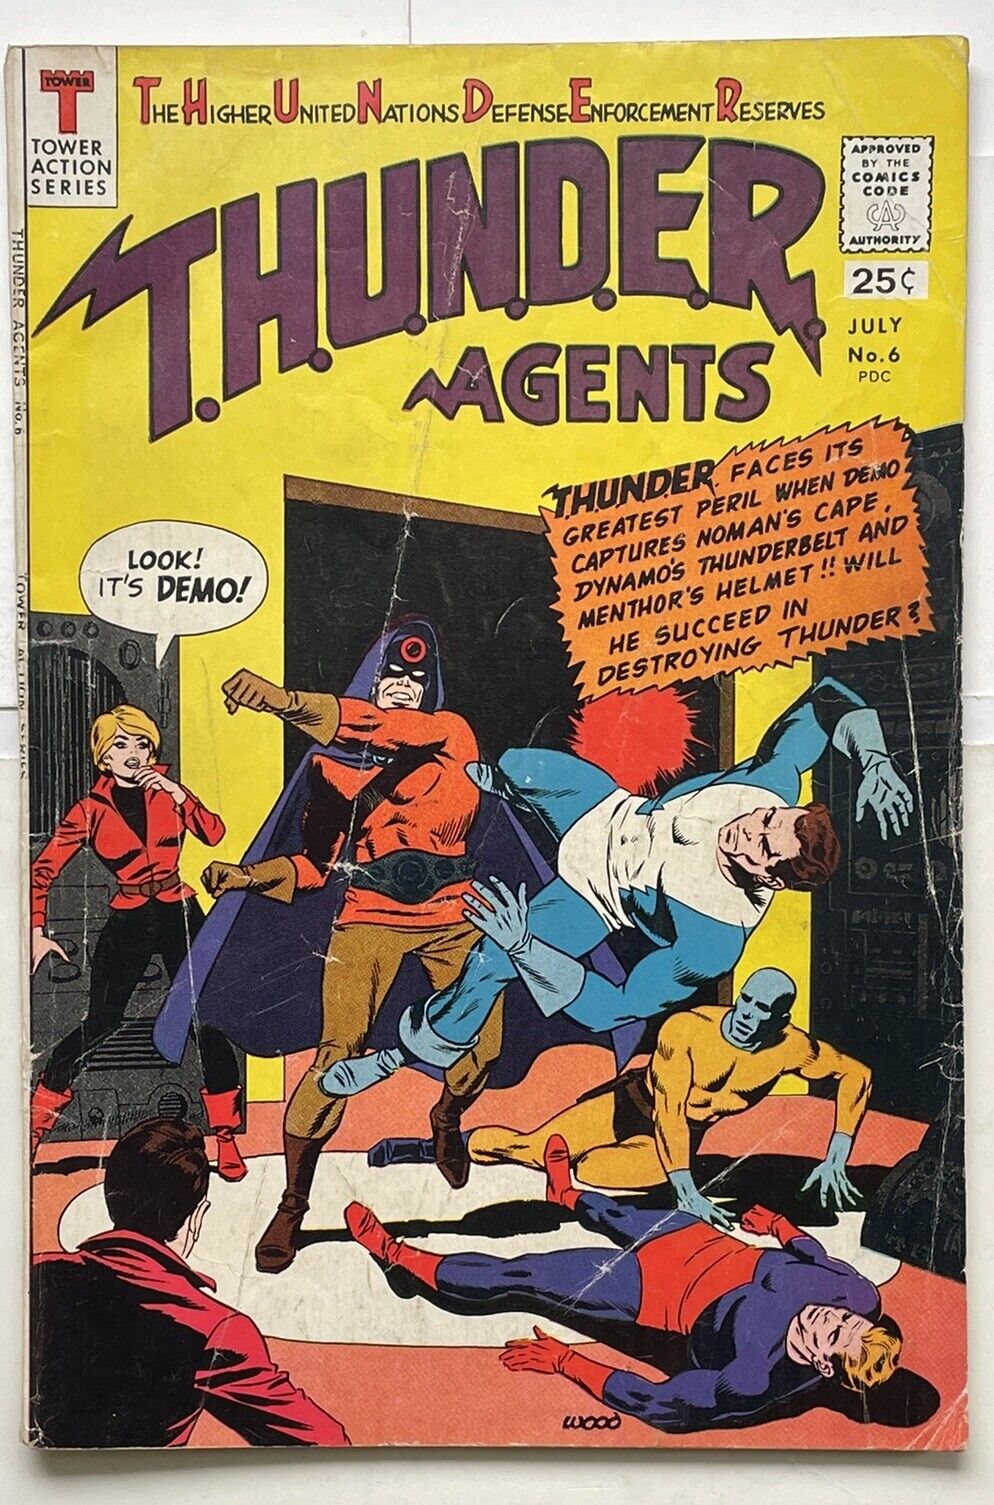 Thunder Agents #6 -Tower Comics -1966